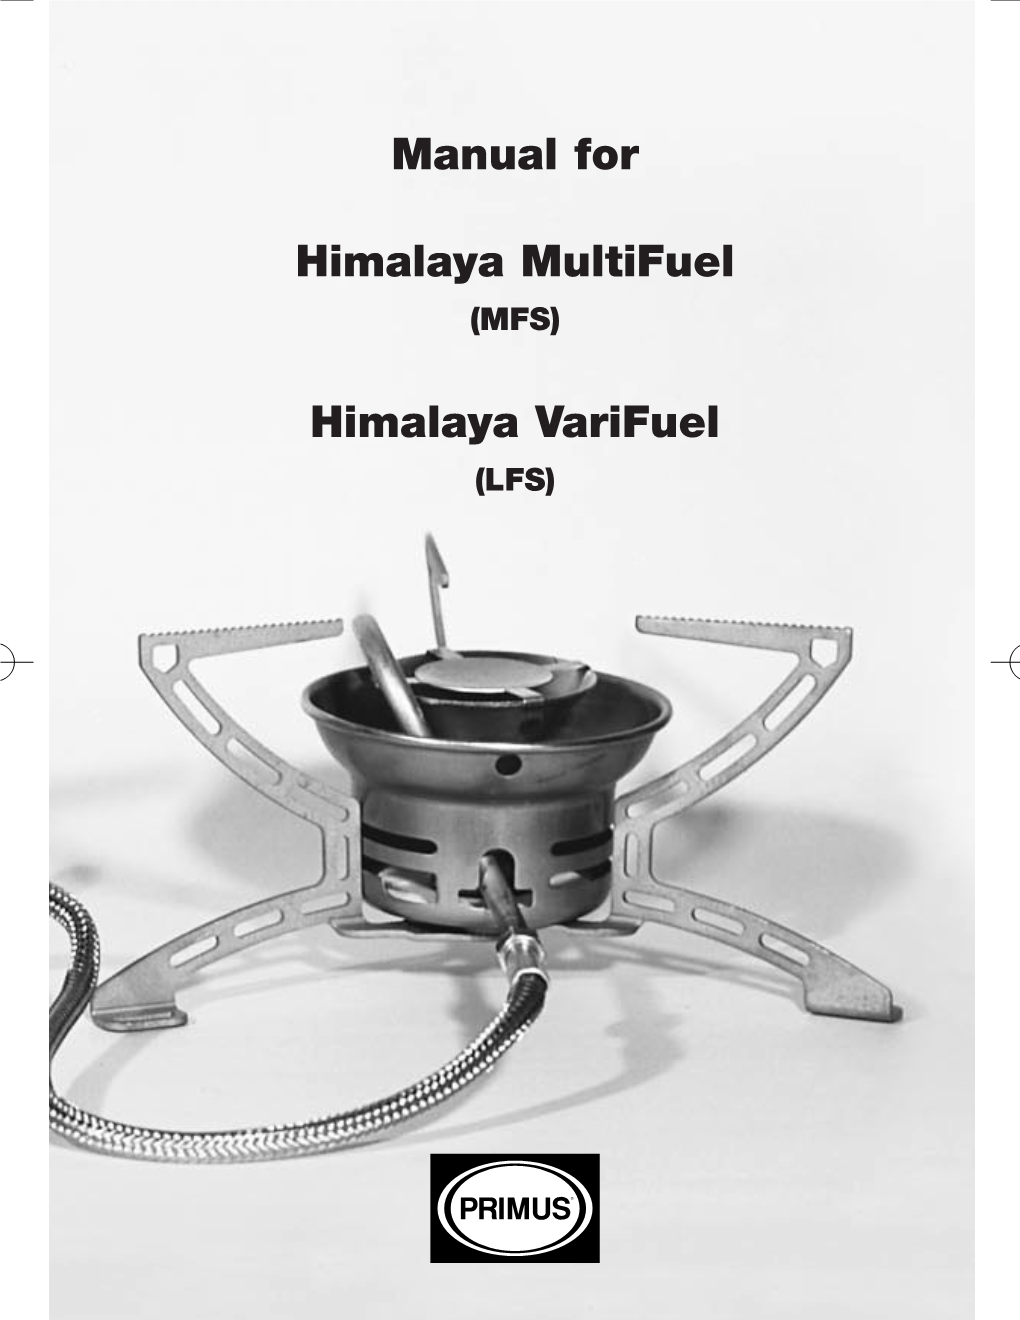 Manual for Himalaya Multifuel